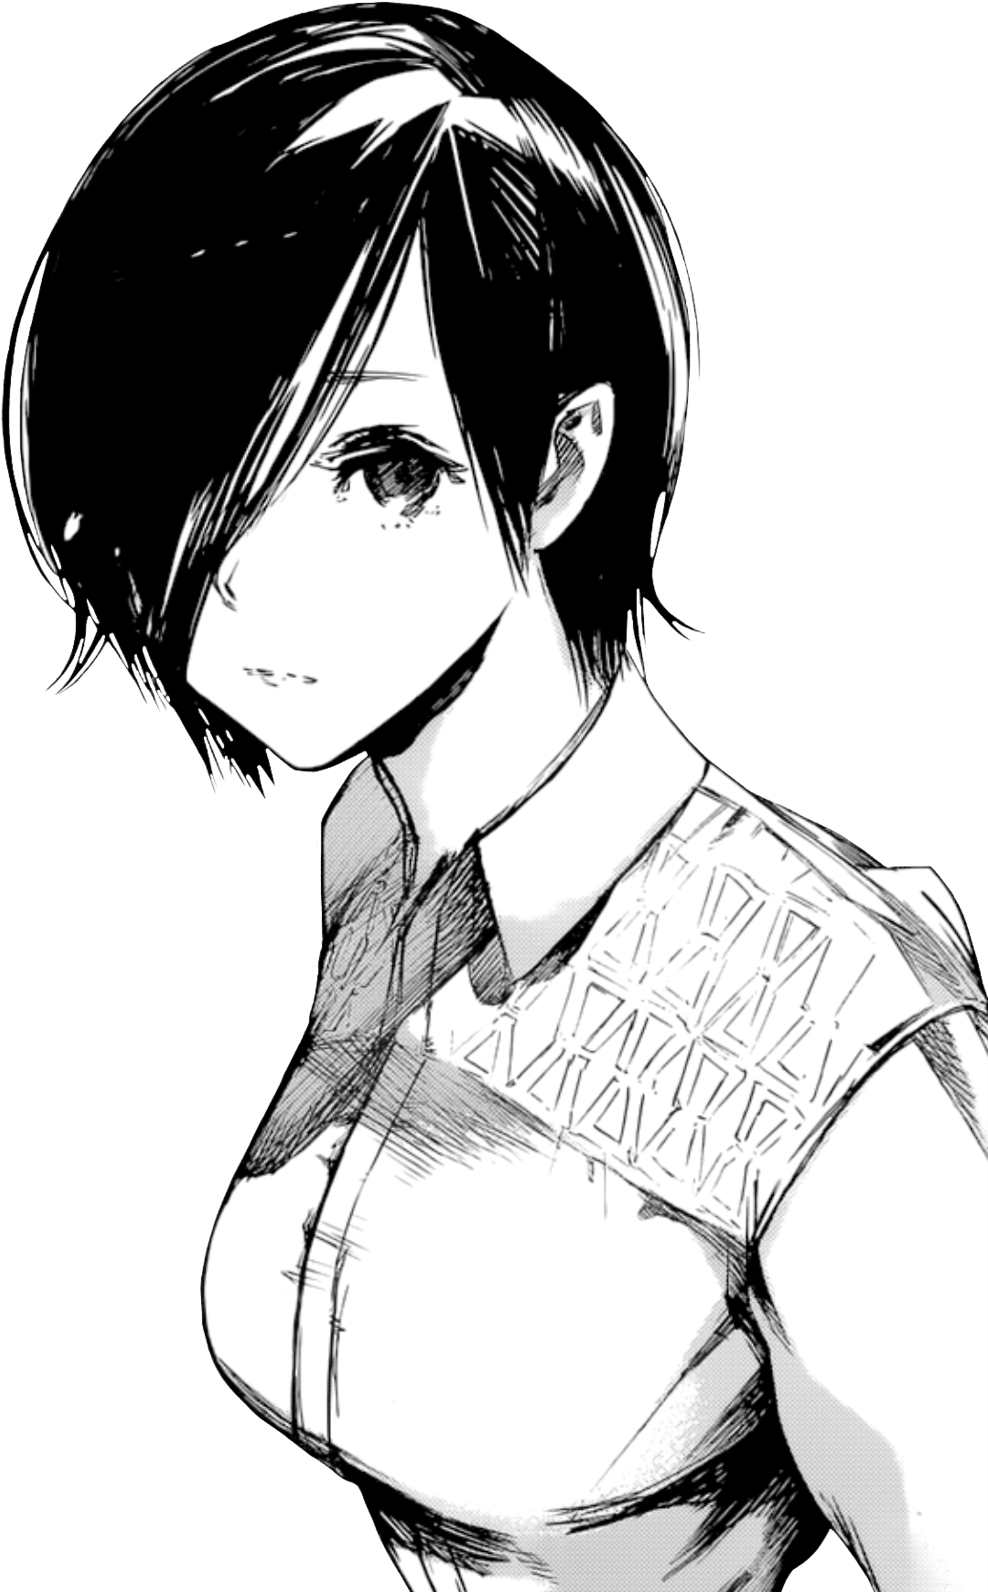 Manga Style Female Character